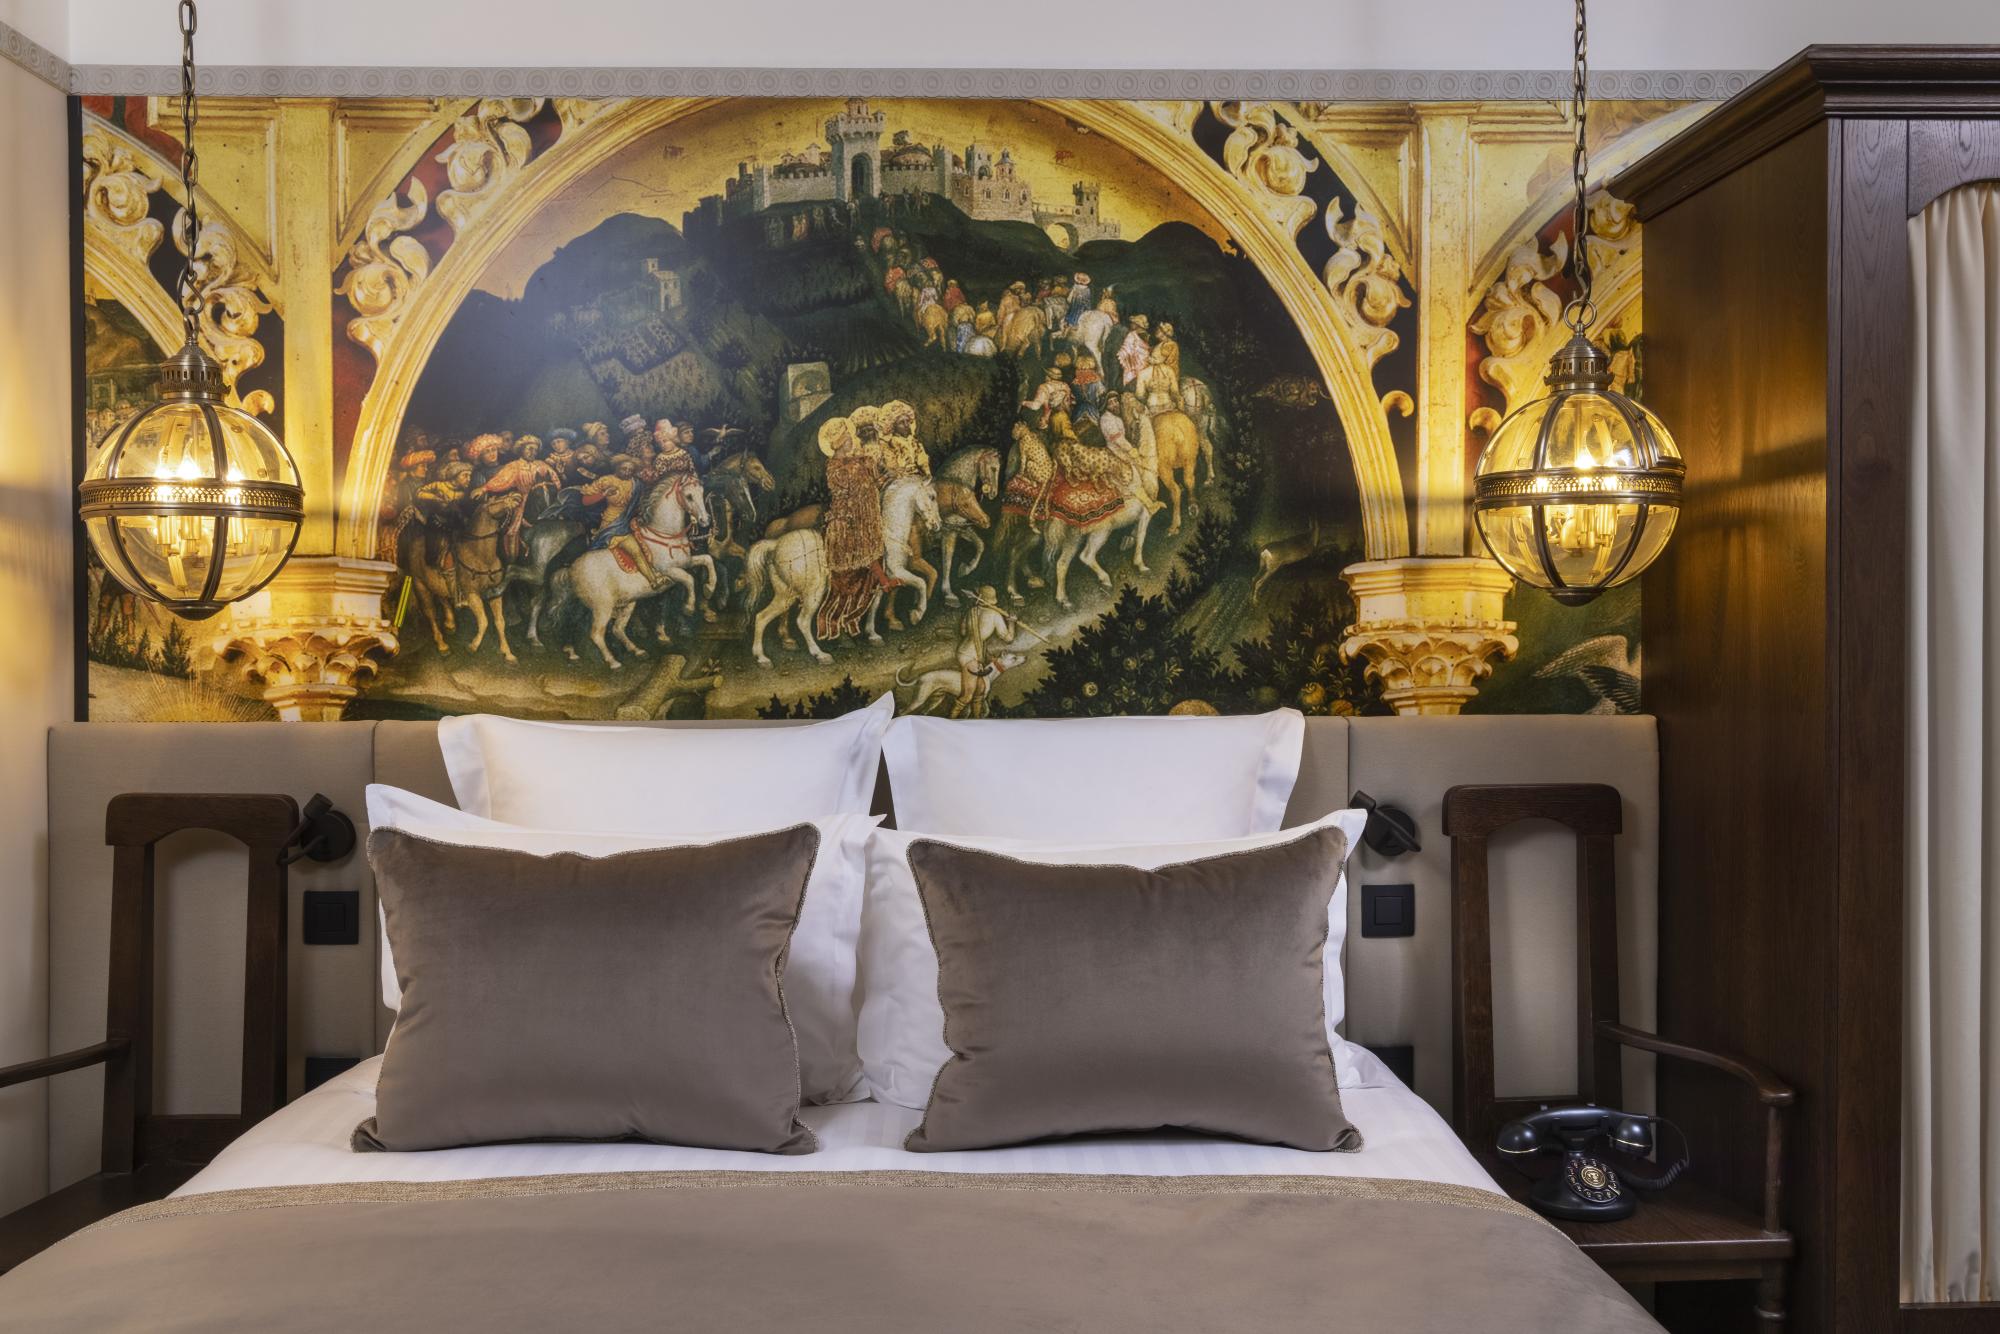 Hotel Vinci Due - Classic Room